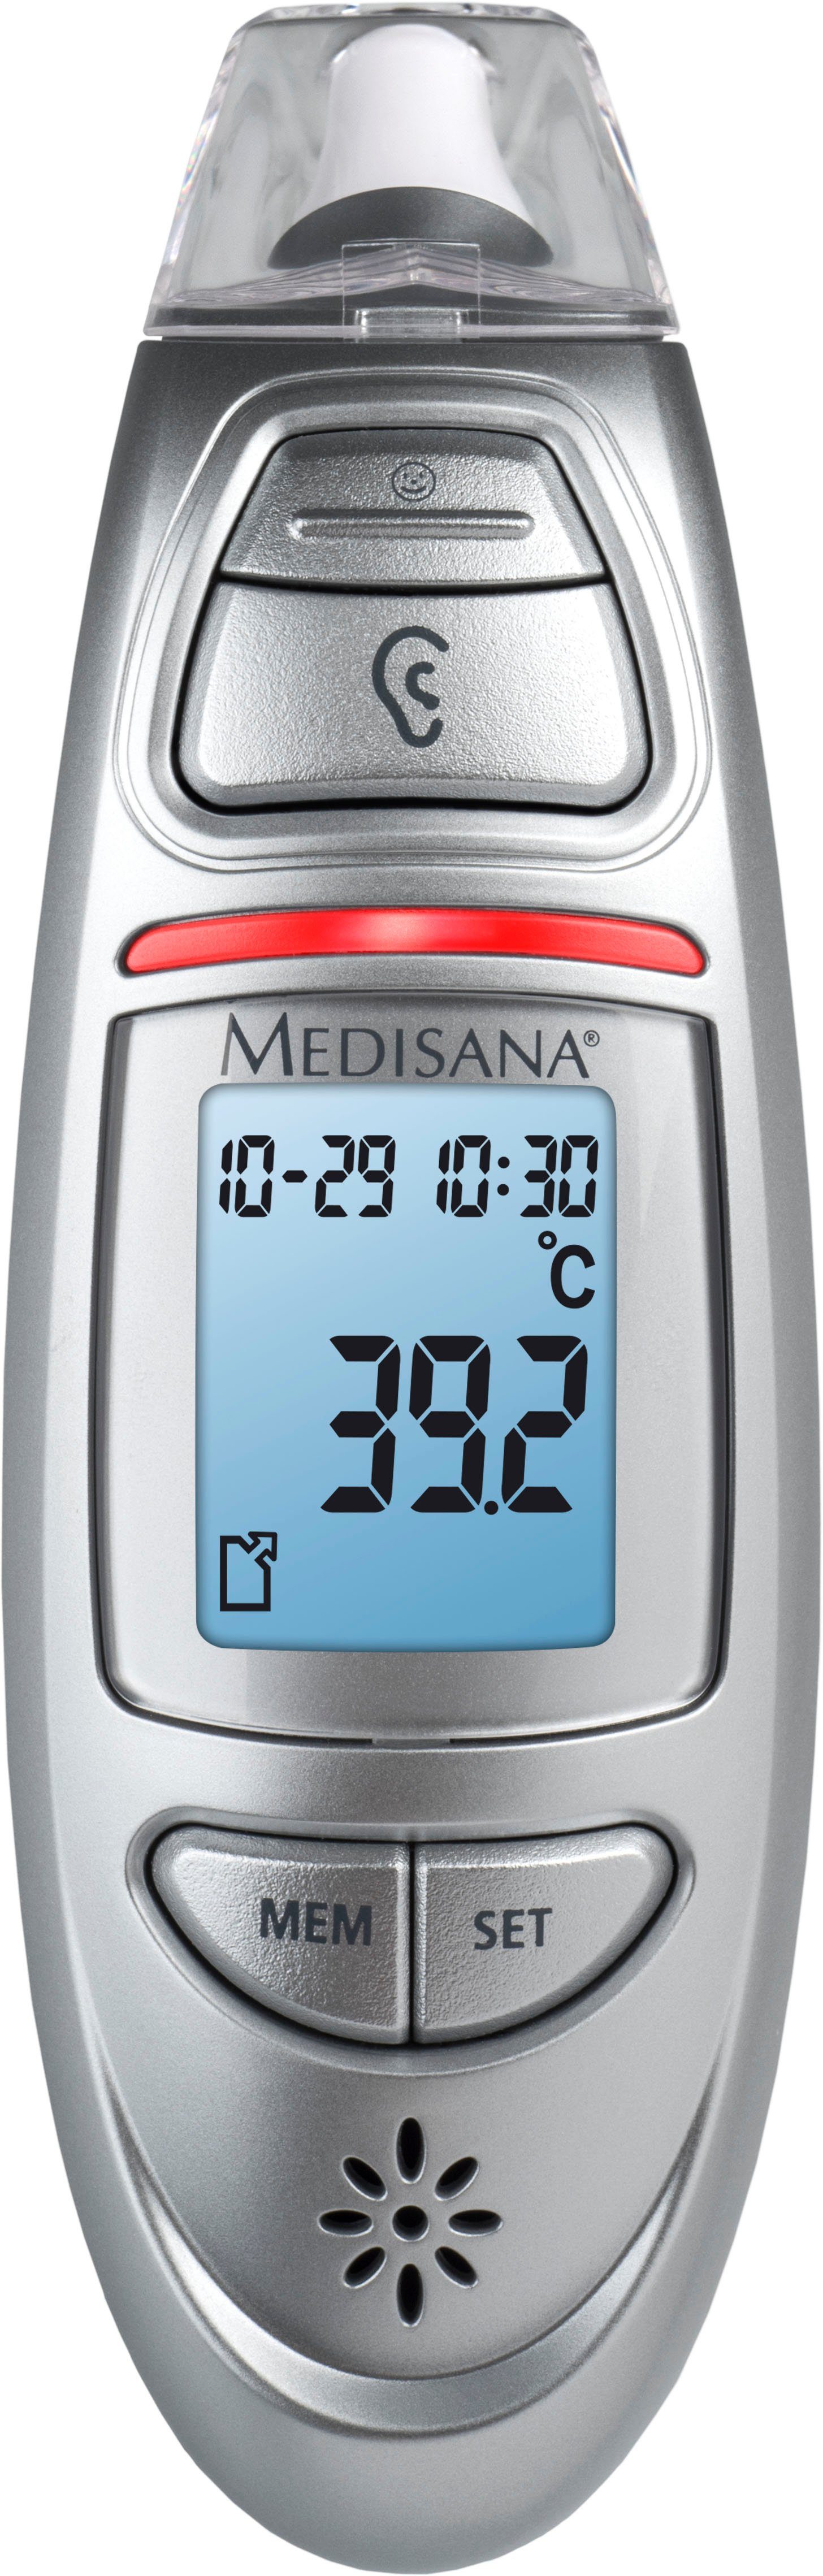 Connect Fieberthermometer TM 750 Medisana